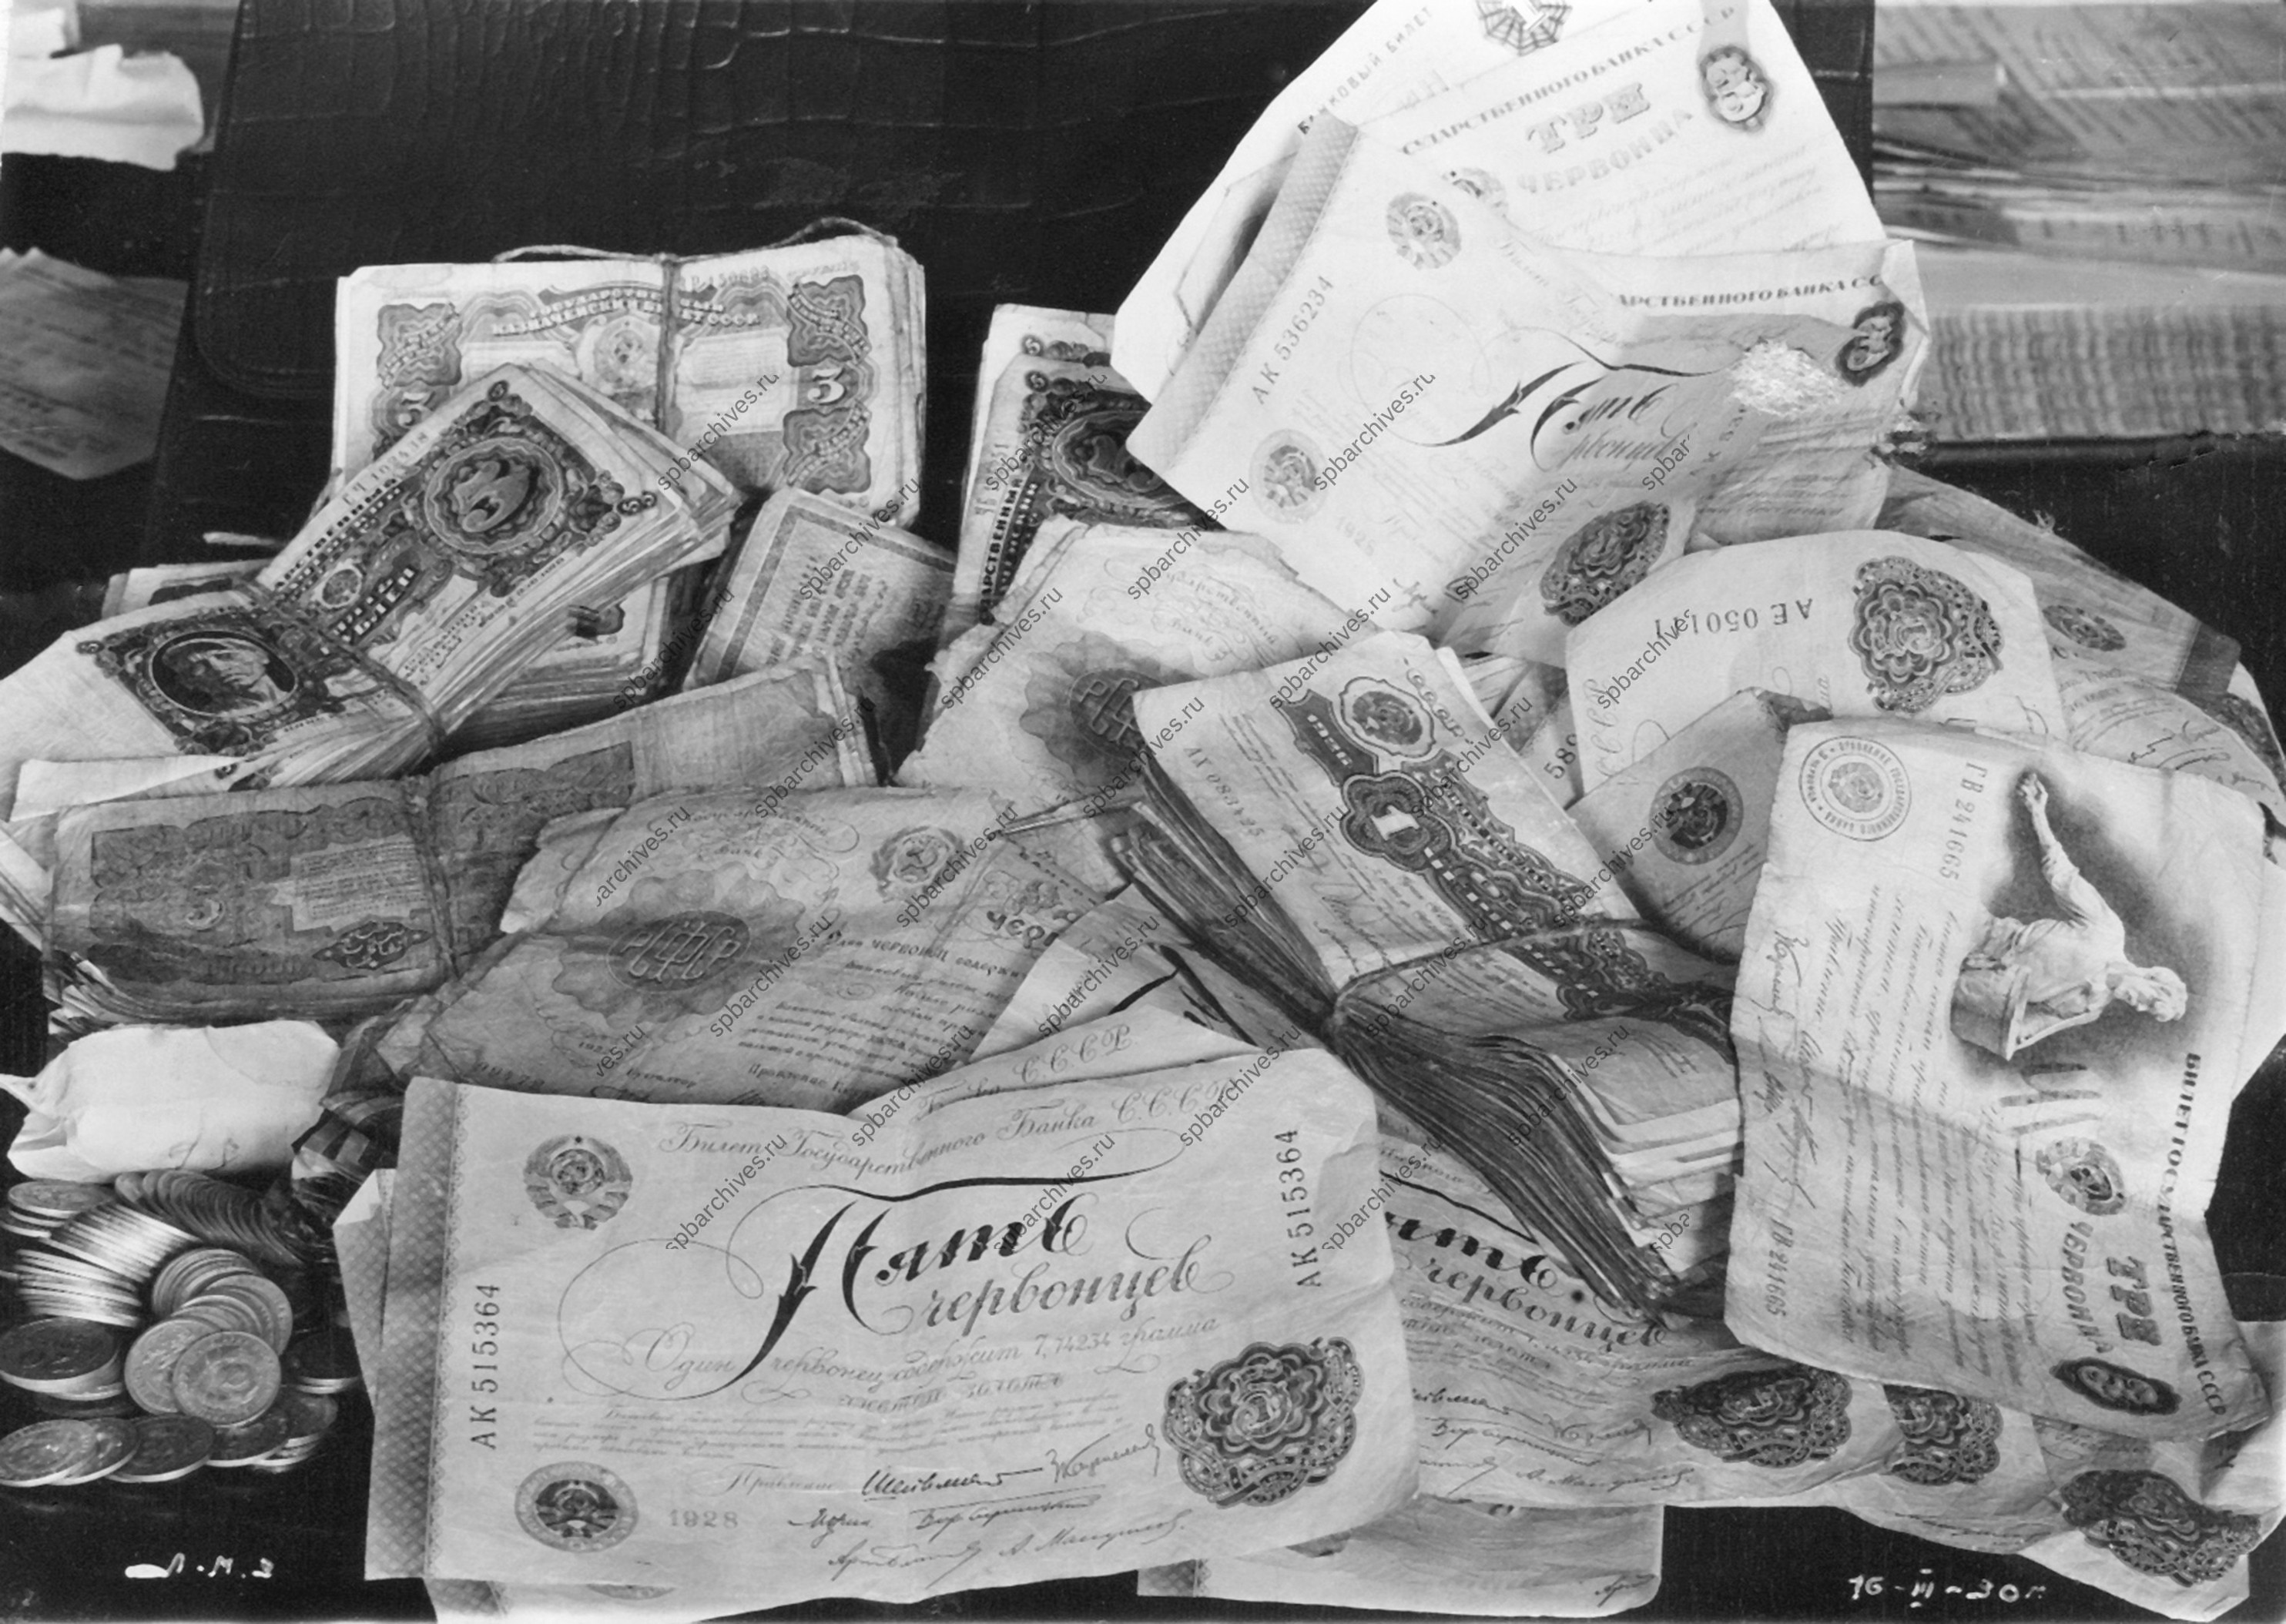 Деньги, выпущенные в конце 1920-х годов.<br />
Место съёмки: не установлено.<br />
Дата съёмки: [16 марта 1930 г.].<br />
Автор съёмки: не установлен.<br />
<em>ЦГАКФФД СПб. Гр84375.</em>